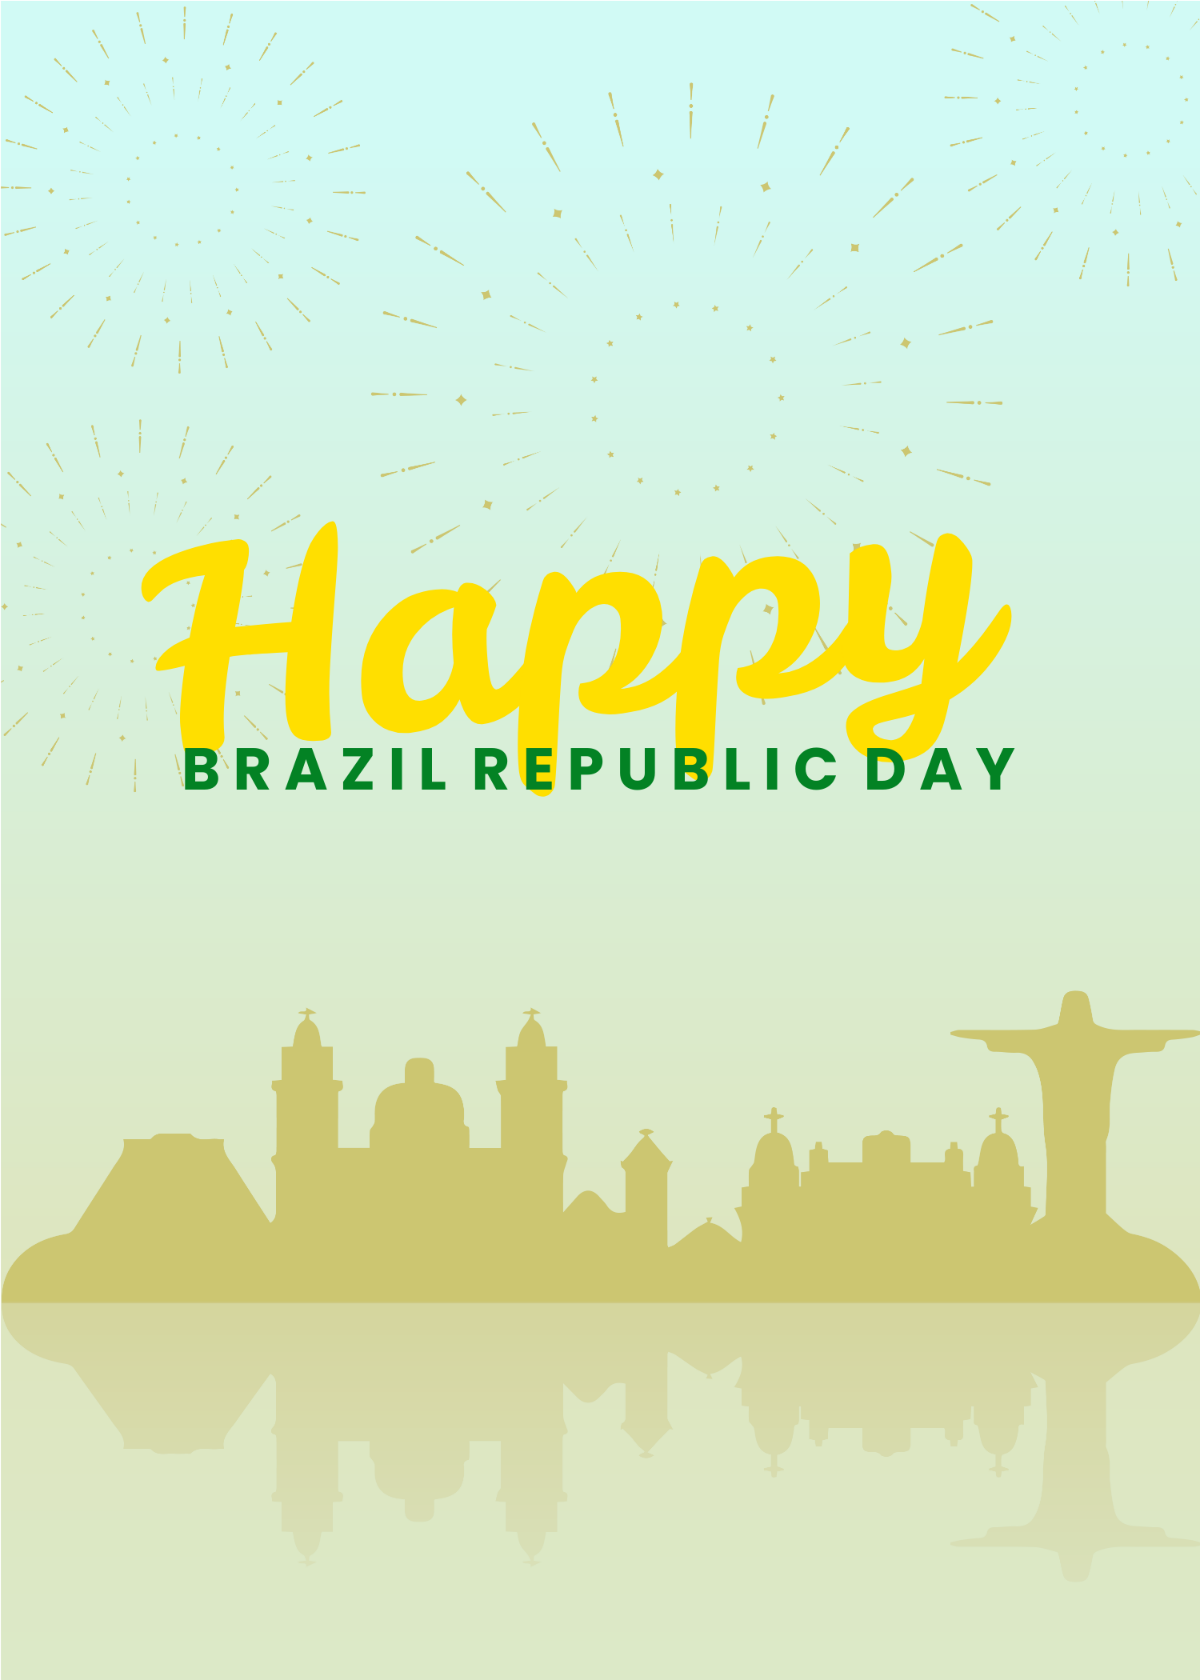 Brazil Republic Day Greeting Card Template